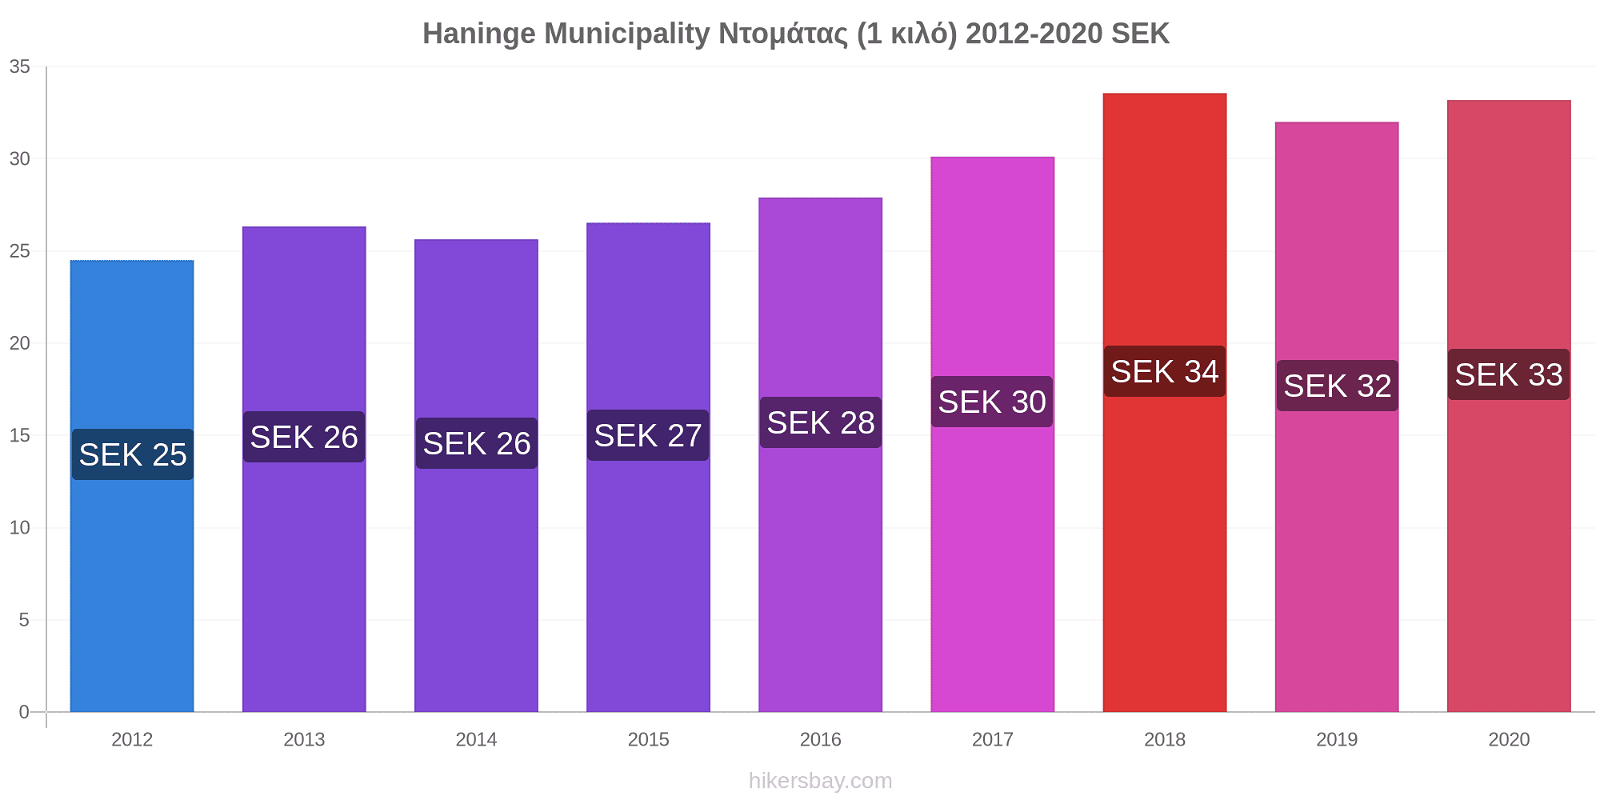 Haninge Municipality αλλαγές τιμών Ντομάτας (1 κιλό) hikersbay.com